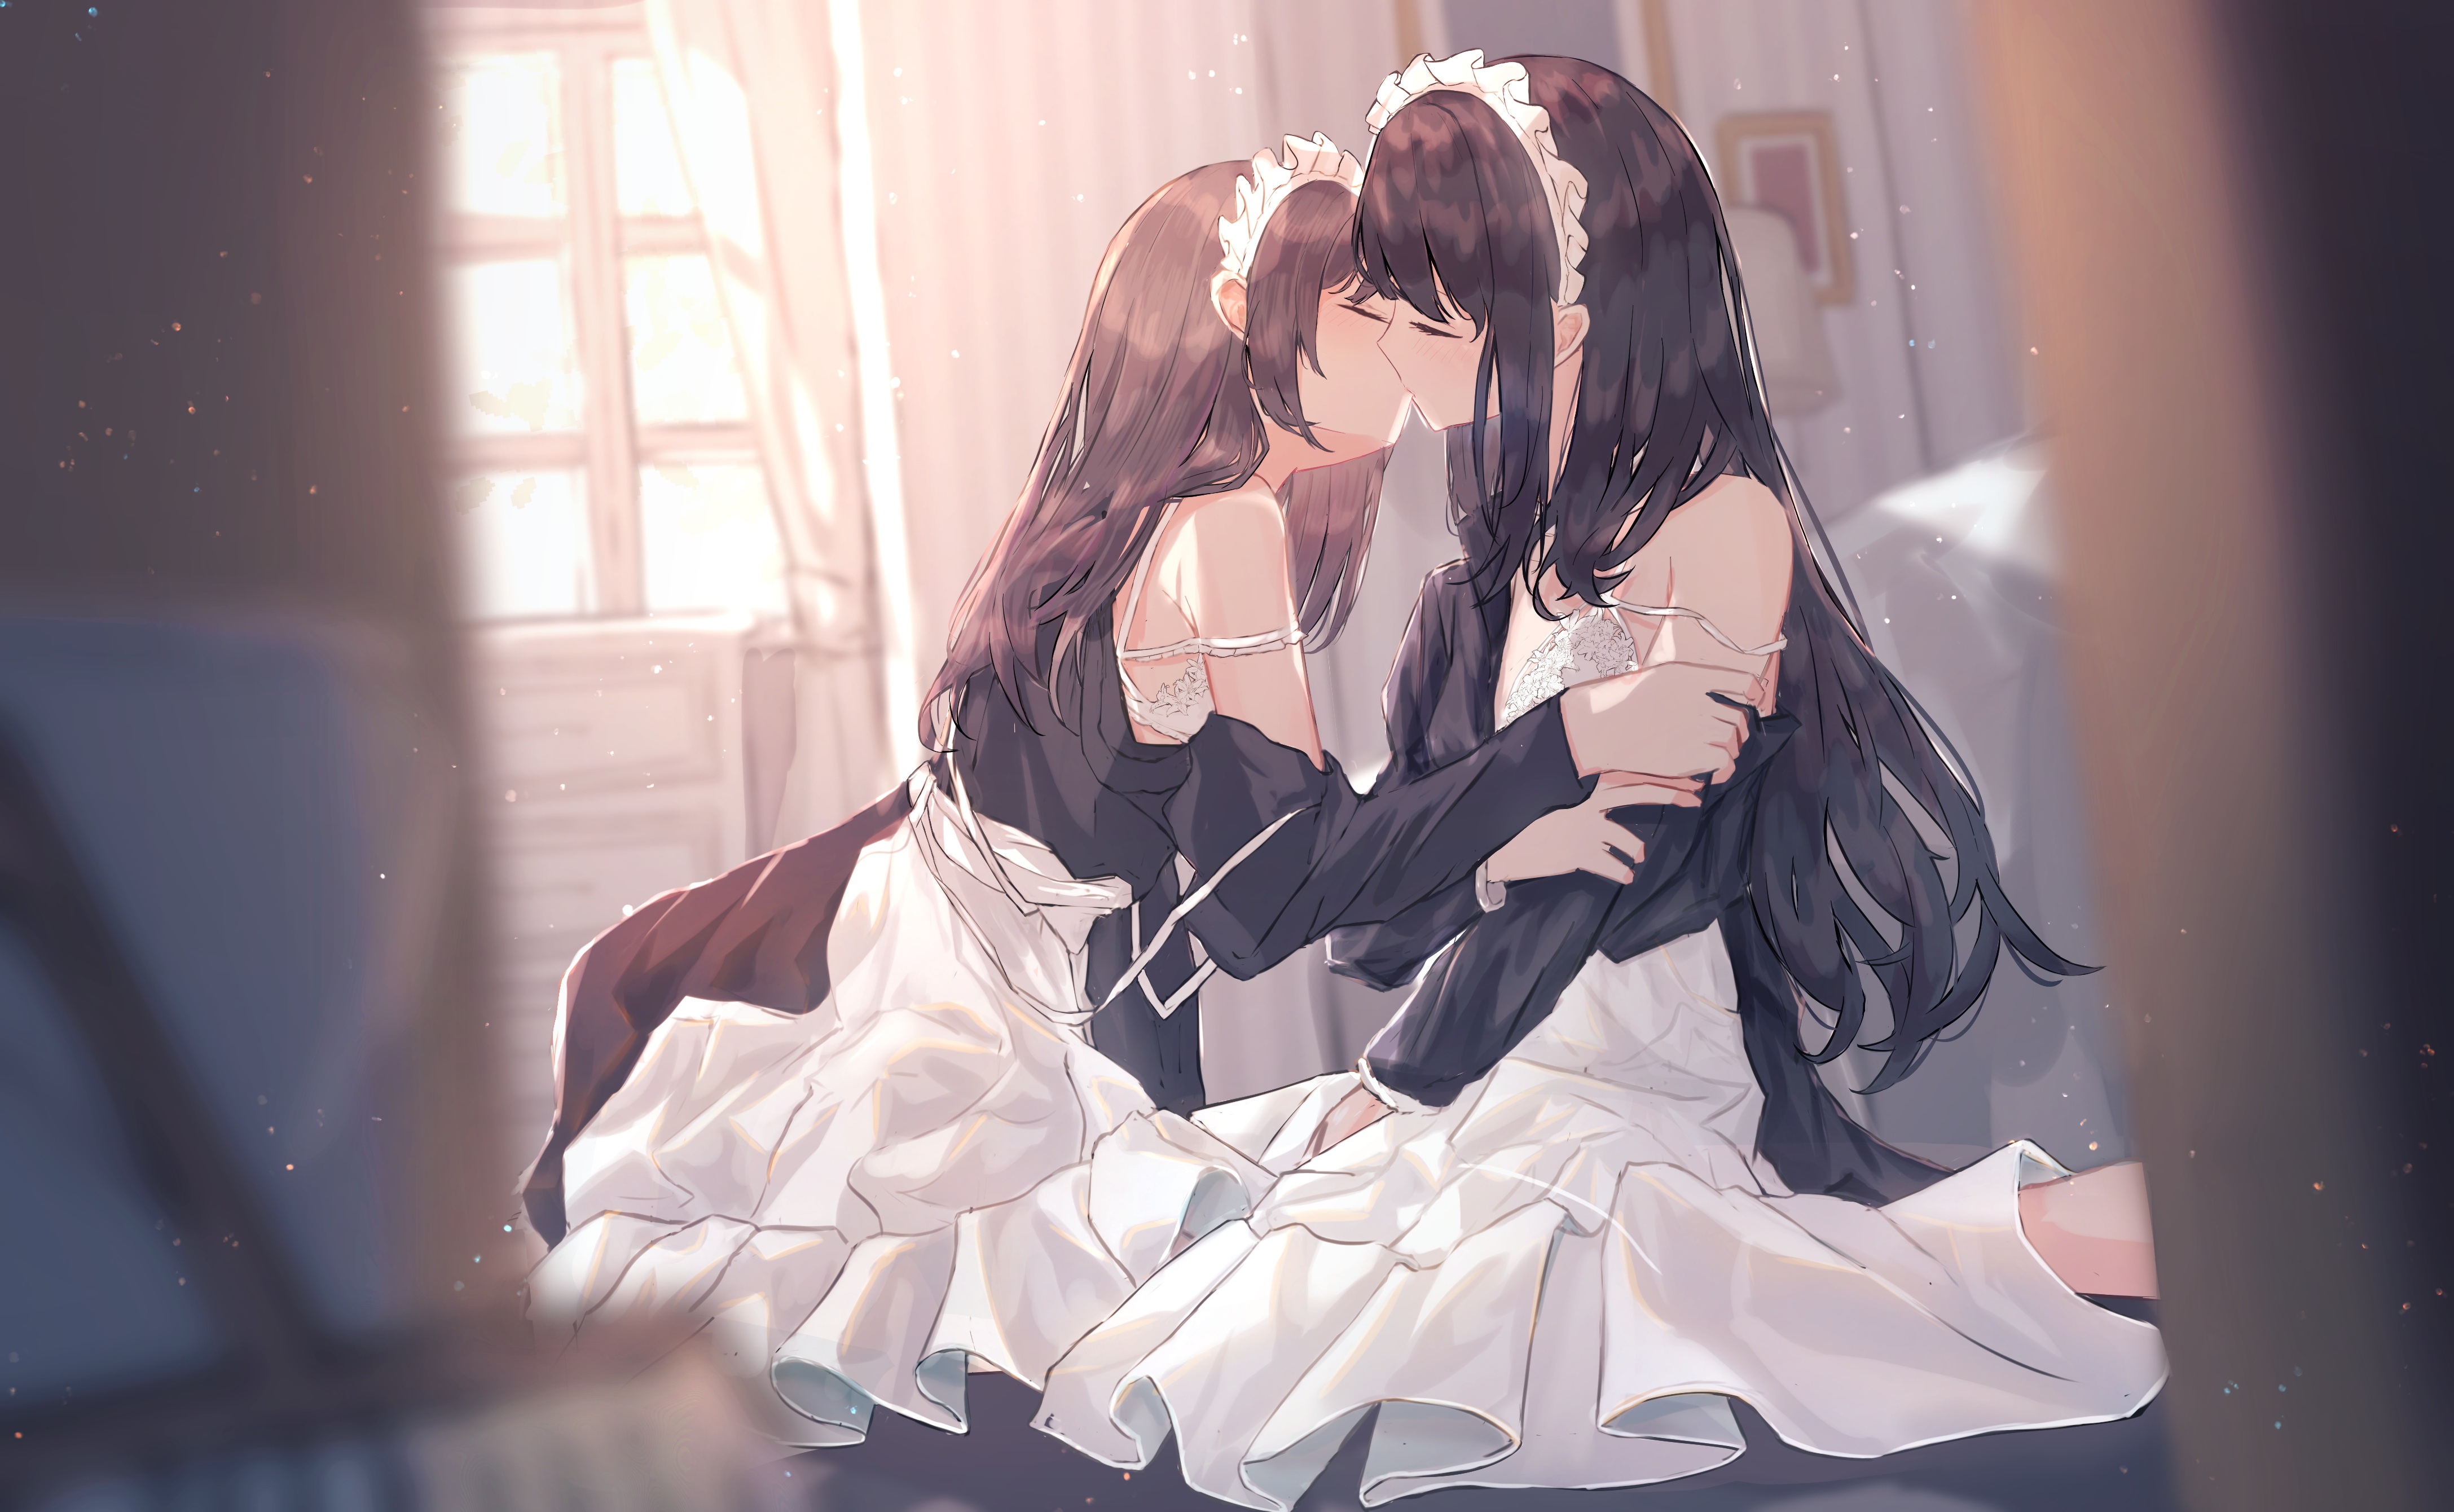 Lesbians Closed Eyes Two Women Anime Anime Girls Kissing Maid